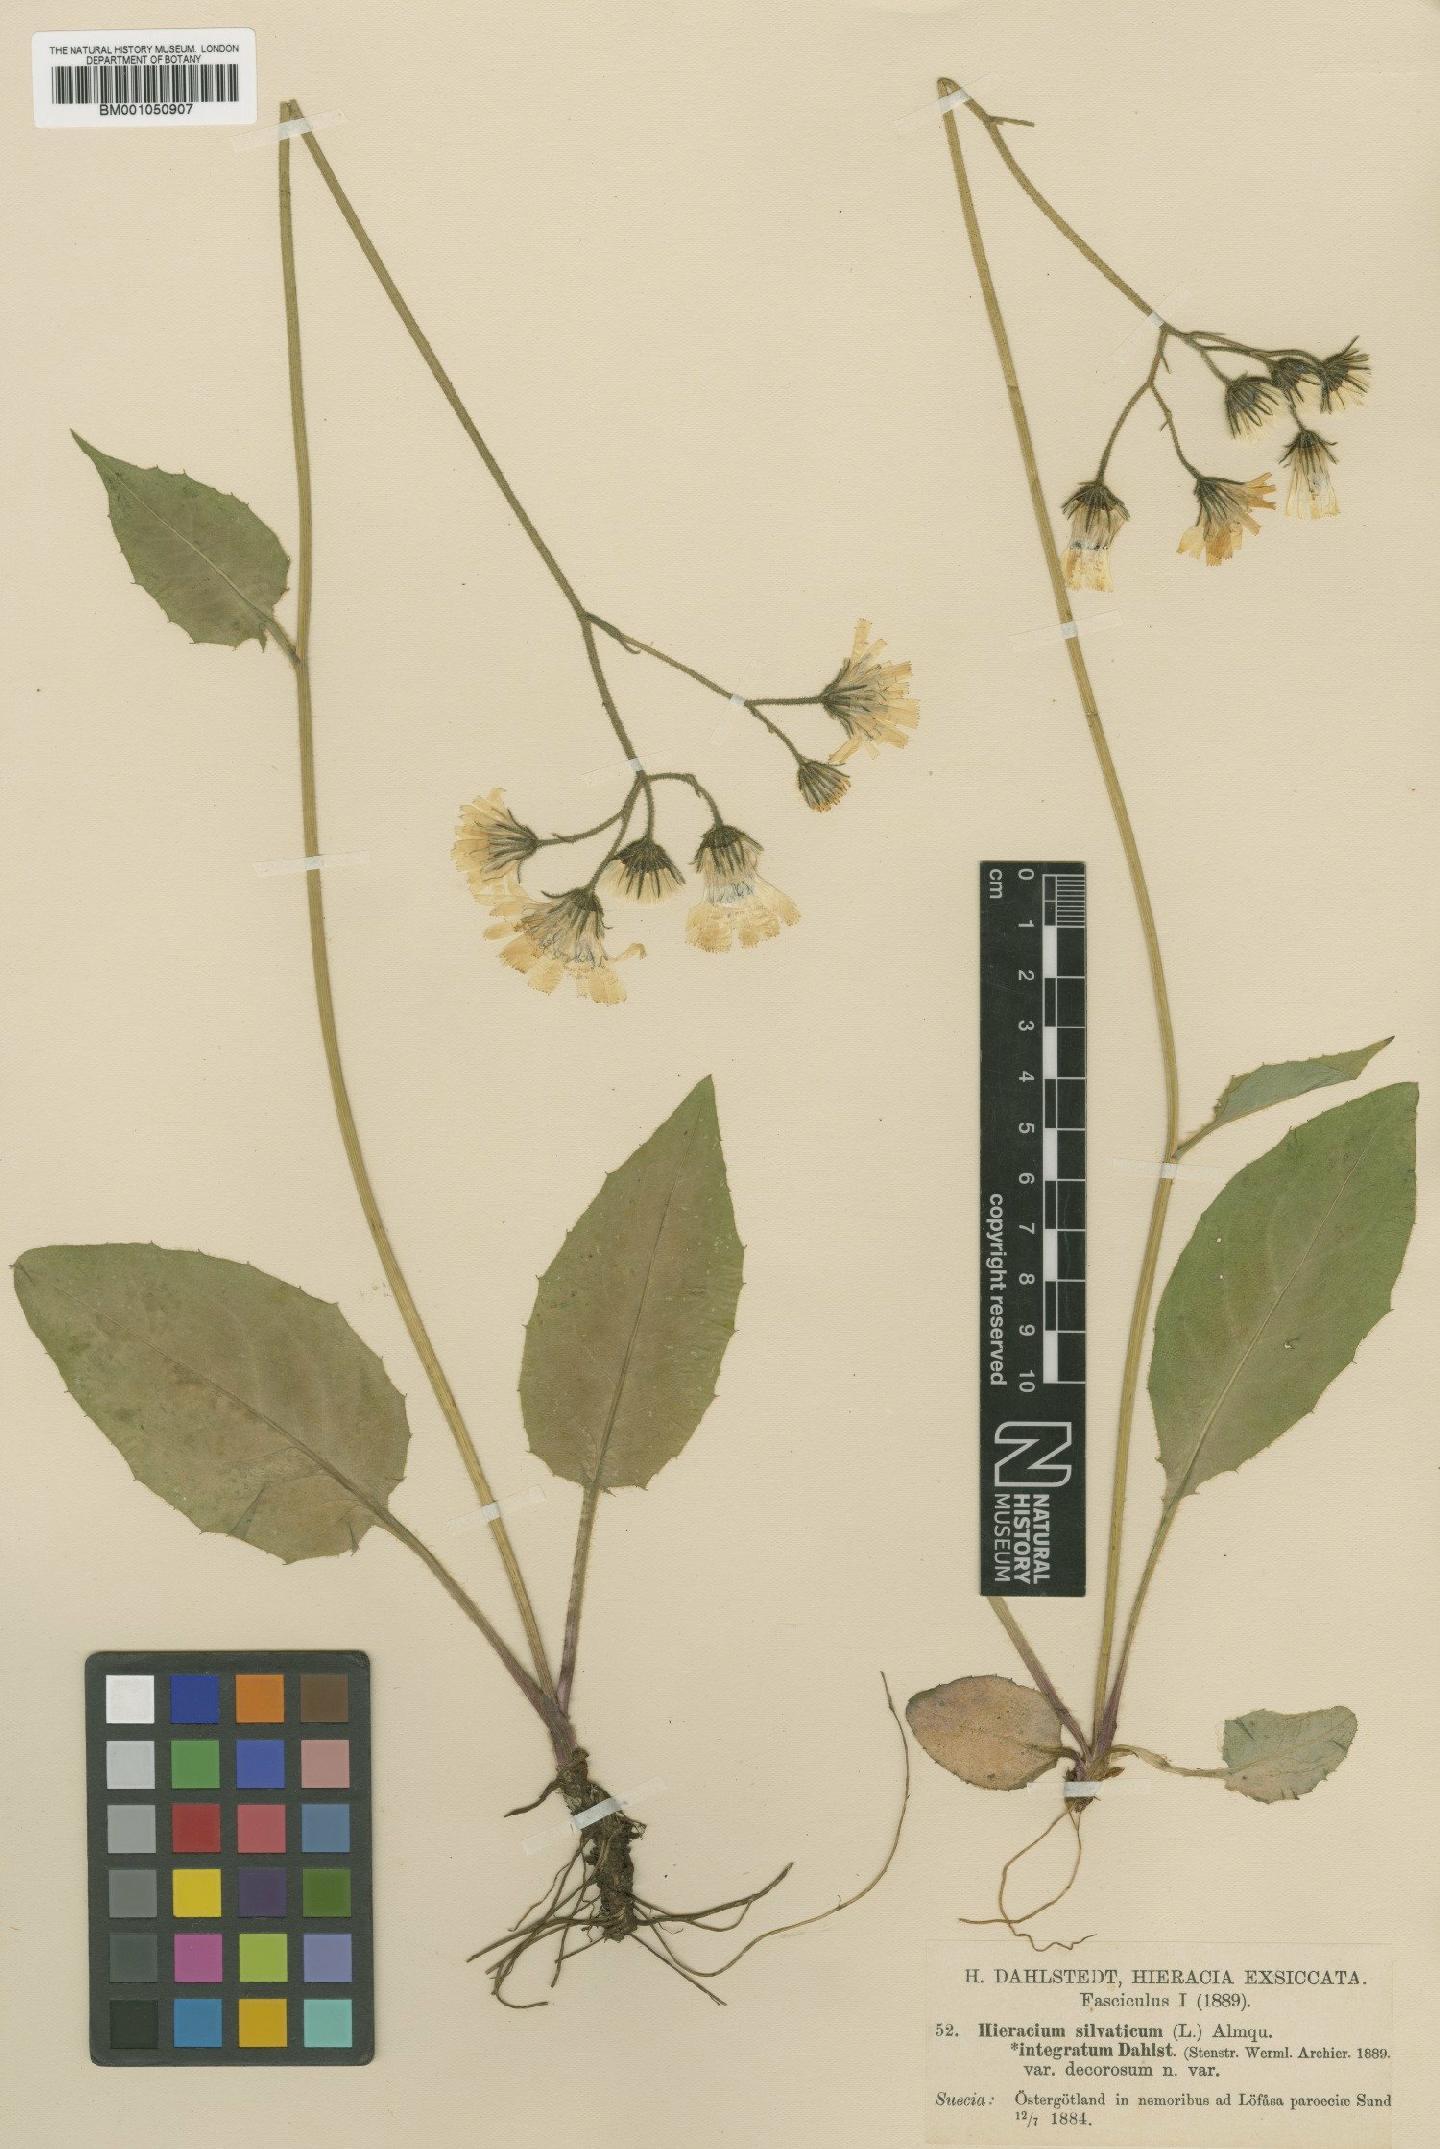 To NHMUK collection (Hieracium murorum subsp. integratum (Dahlst.) Zahn; TYPE; NHMUK:ecatalogue:2413156)